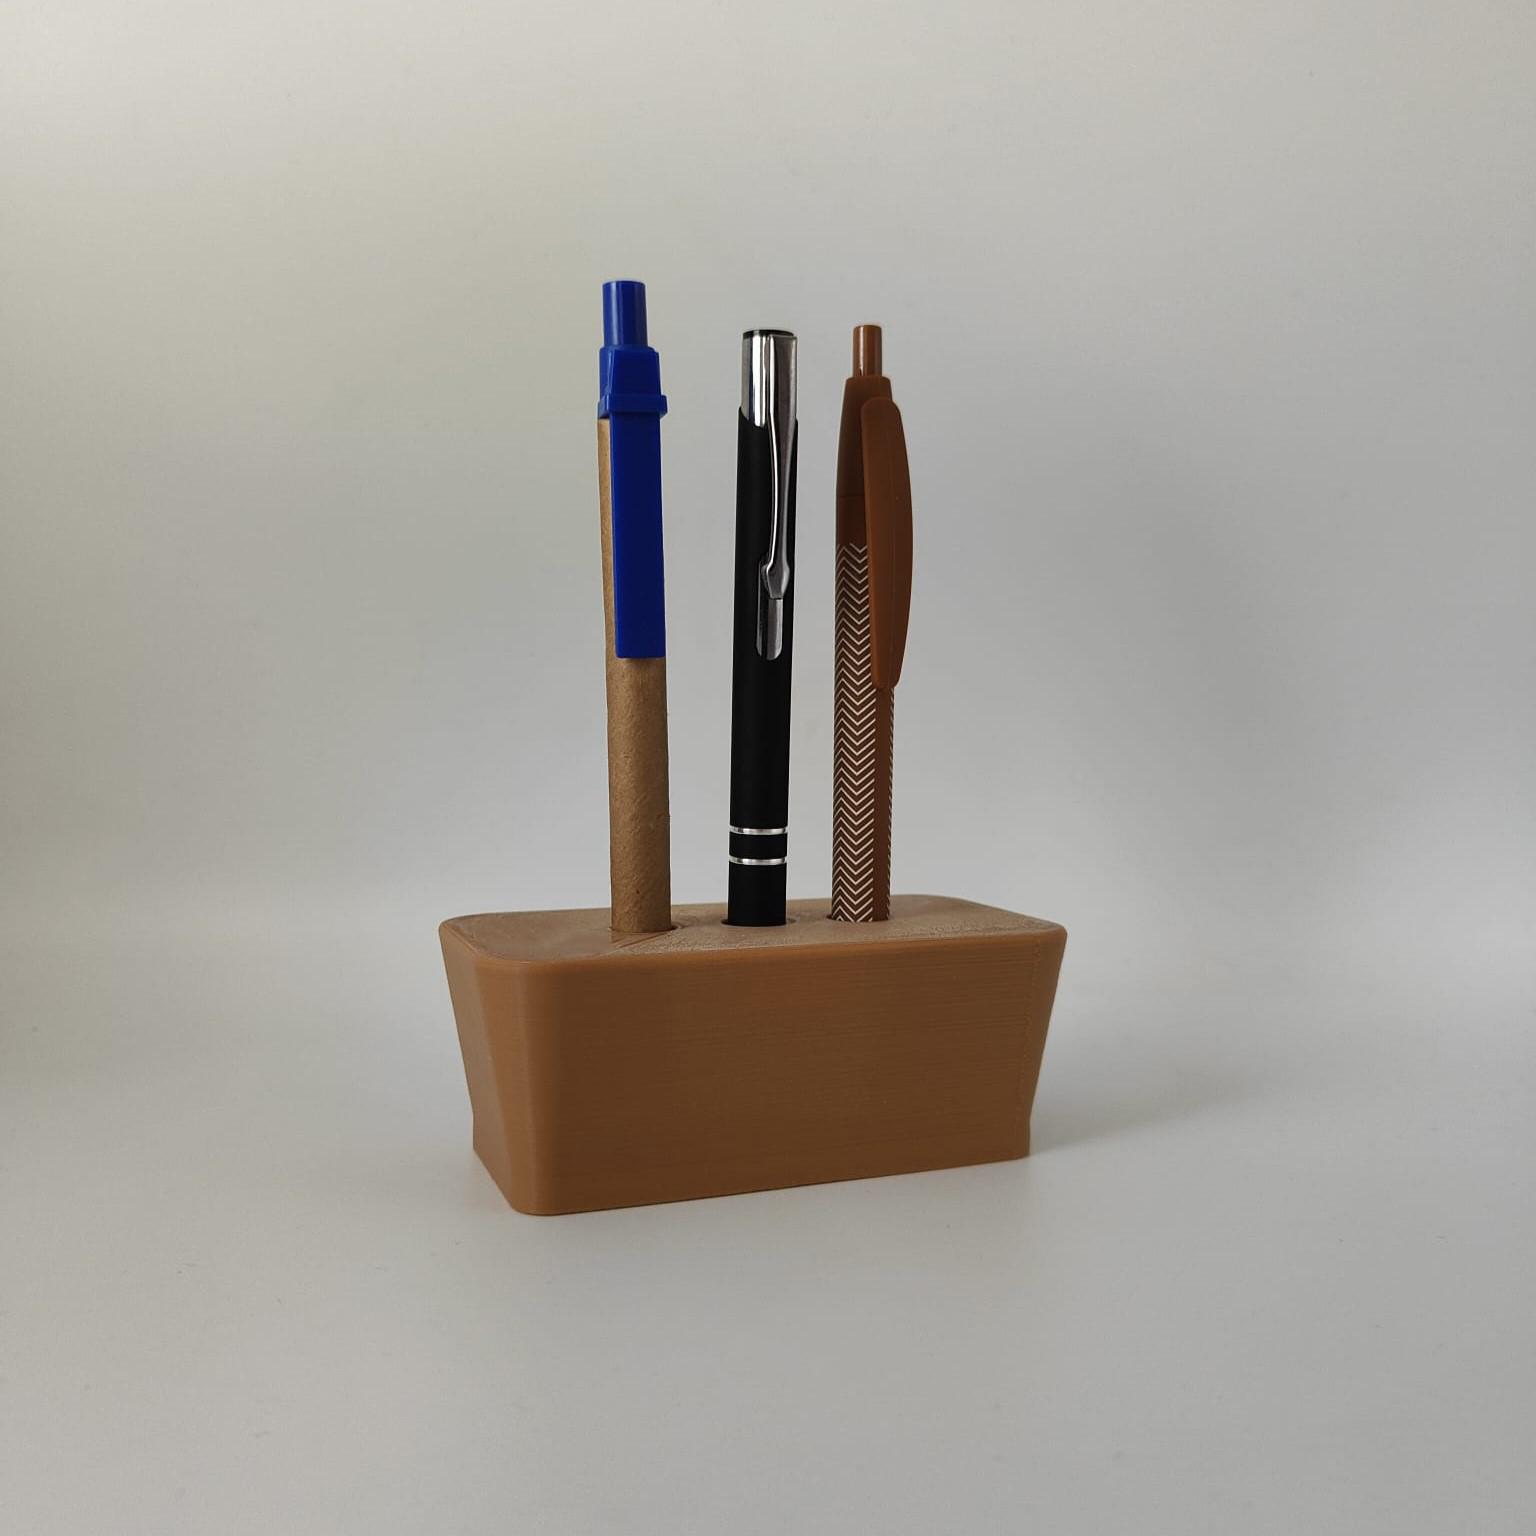 Artemis pen holder 3d model